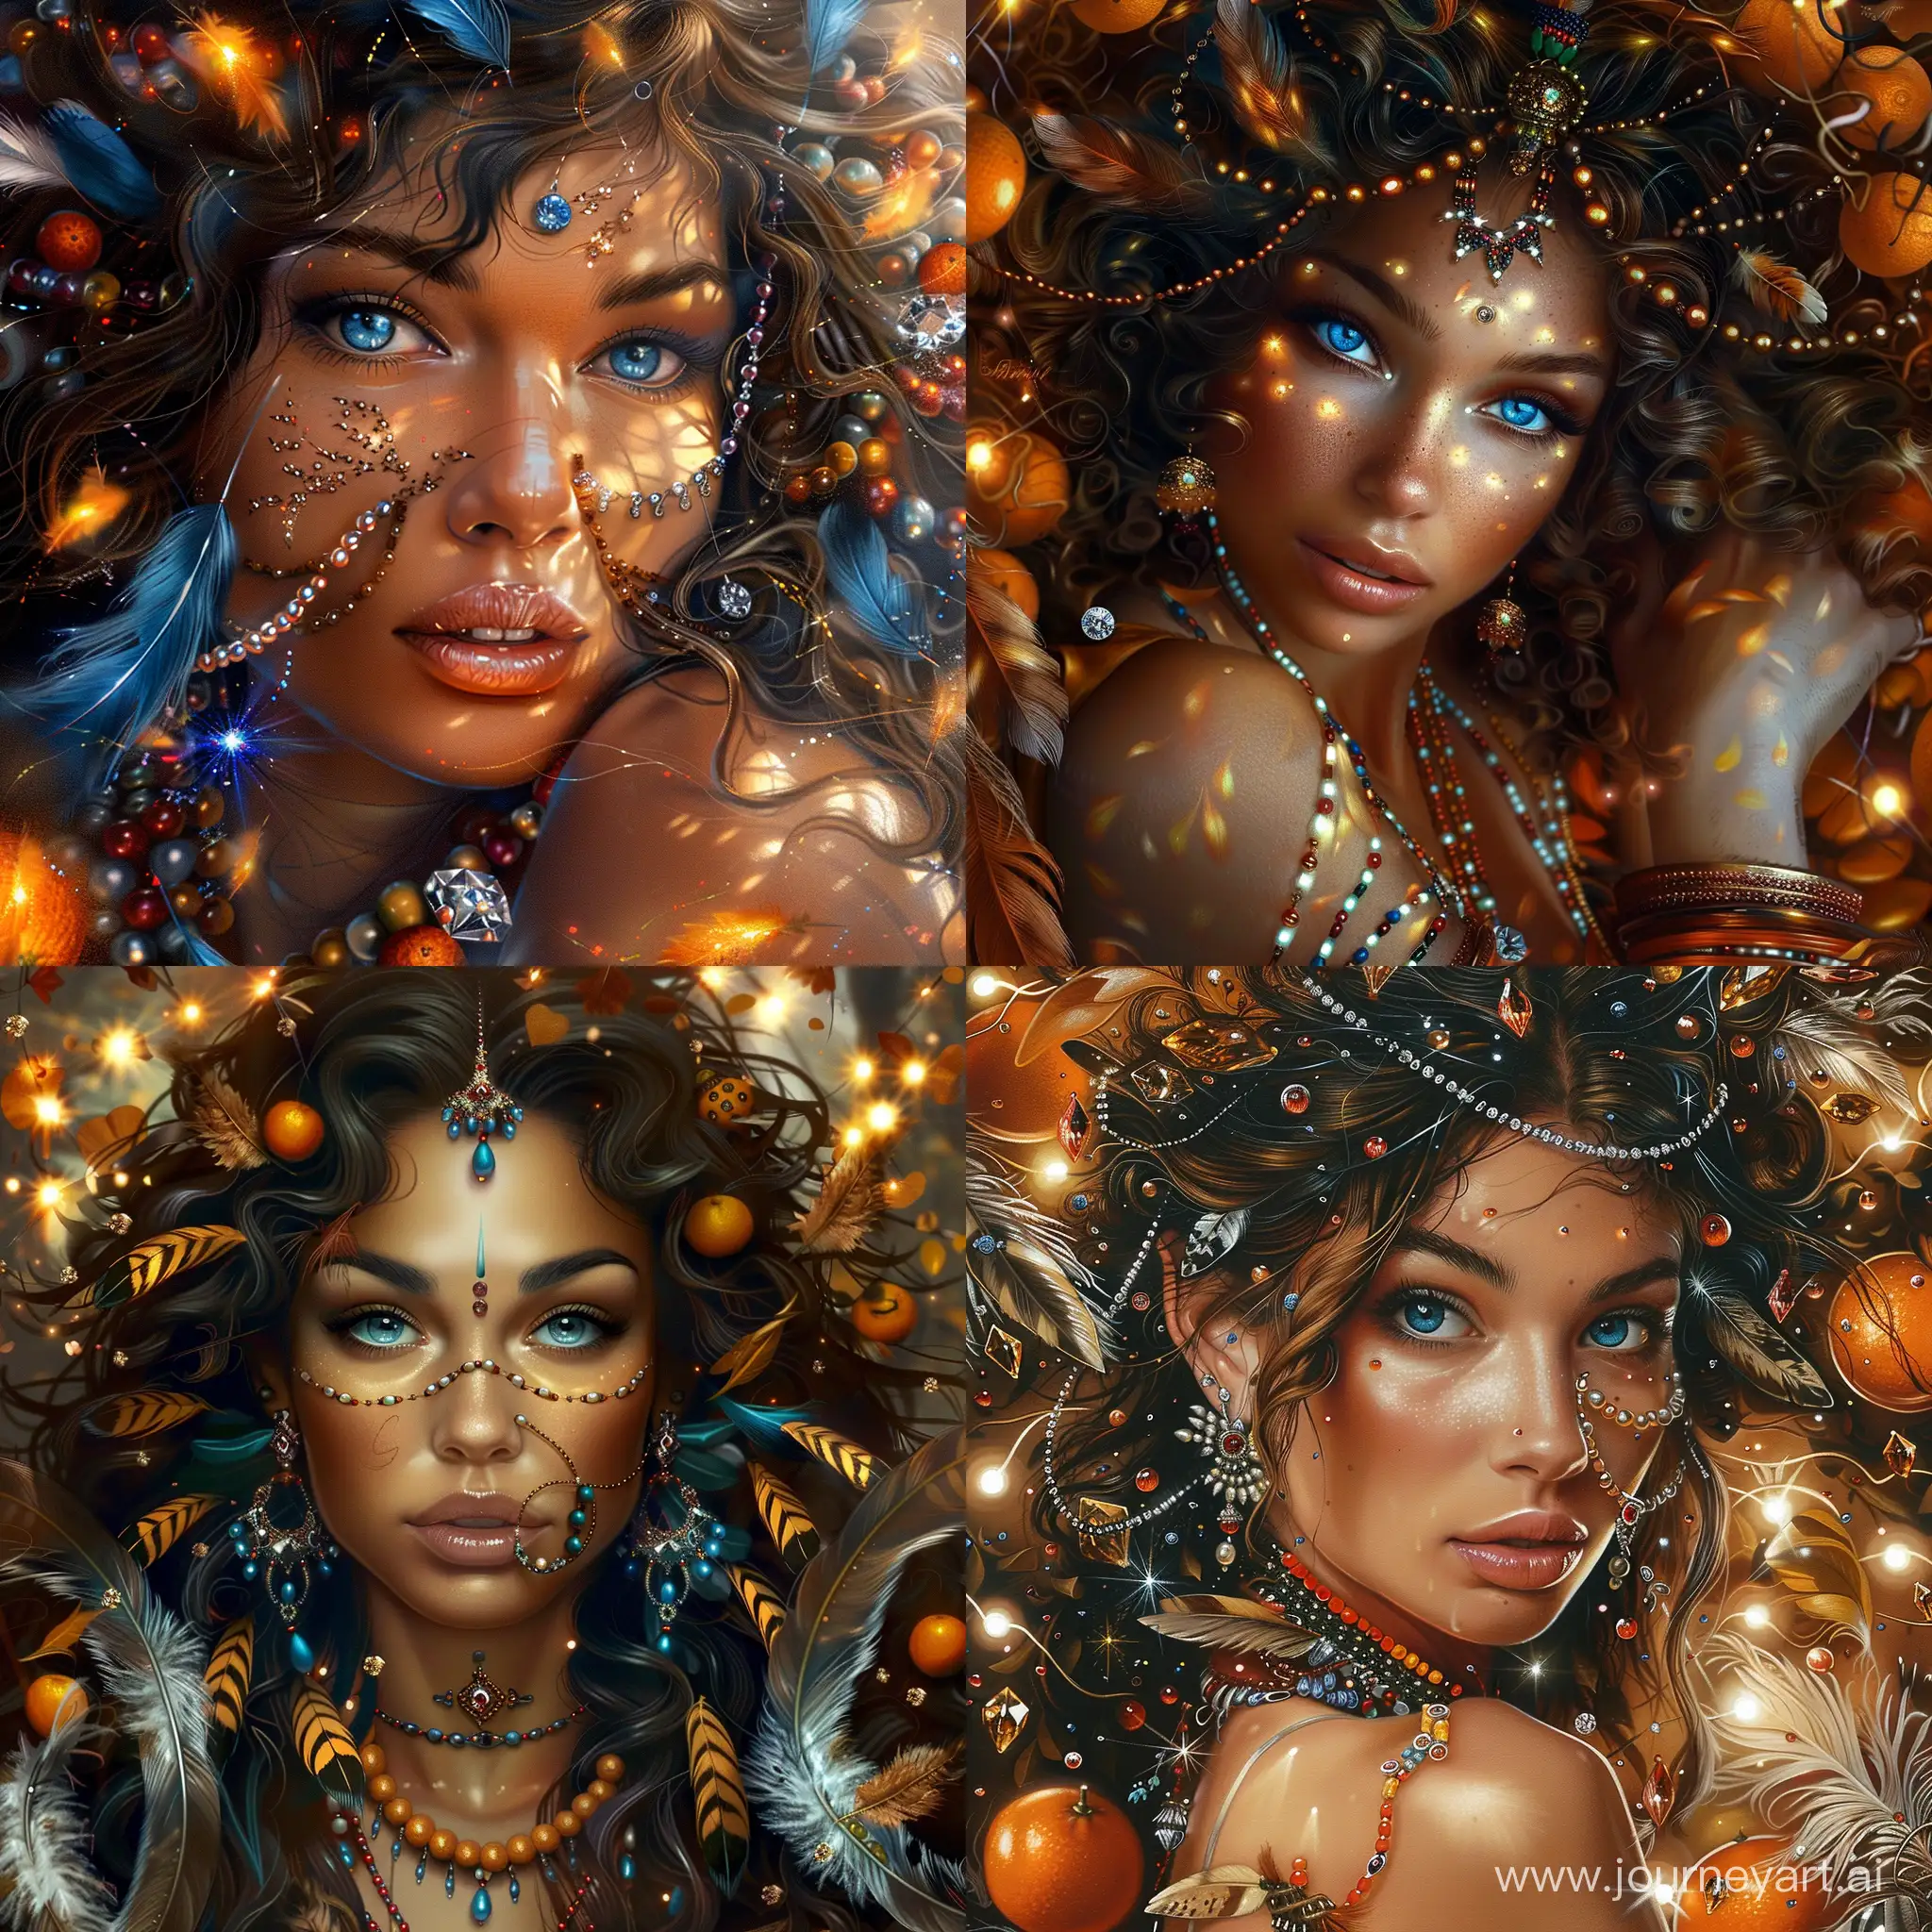 mujer, india, ojos azules, morena, melena rizada, plumas, avalorios, luces, diamantes, naranjas